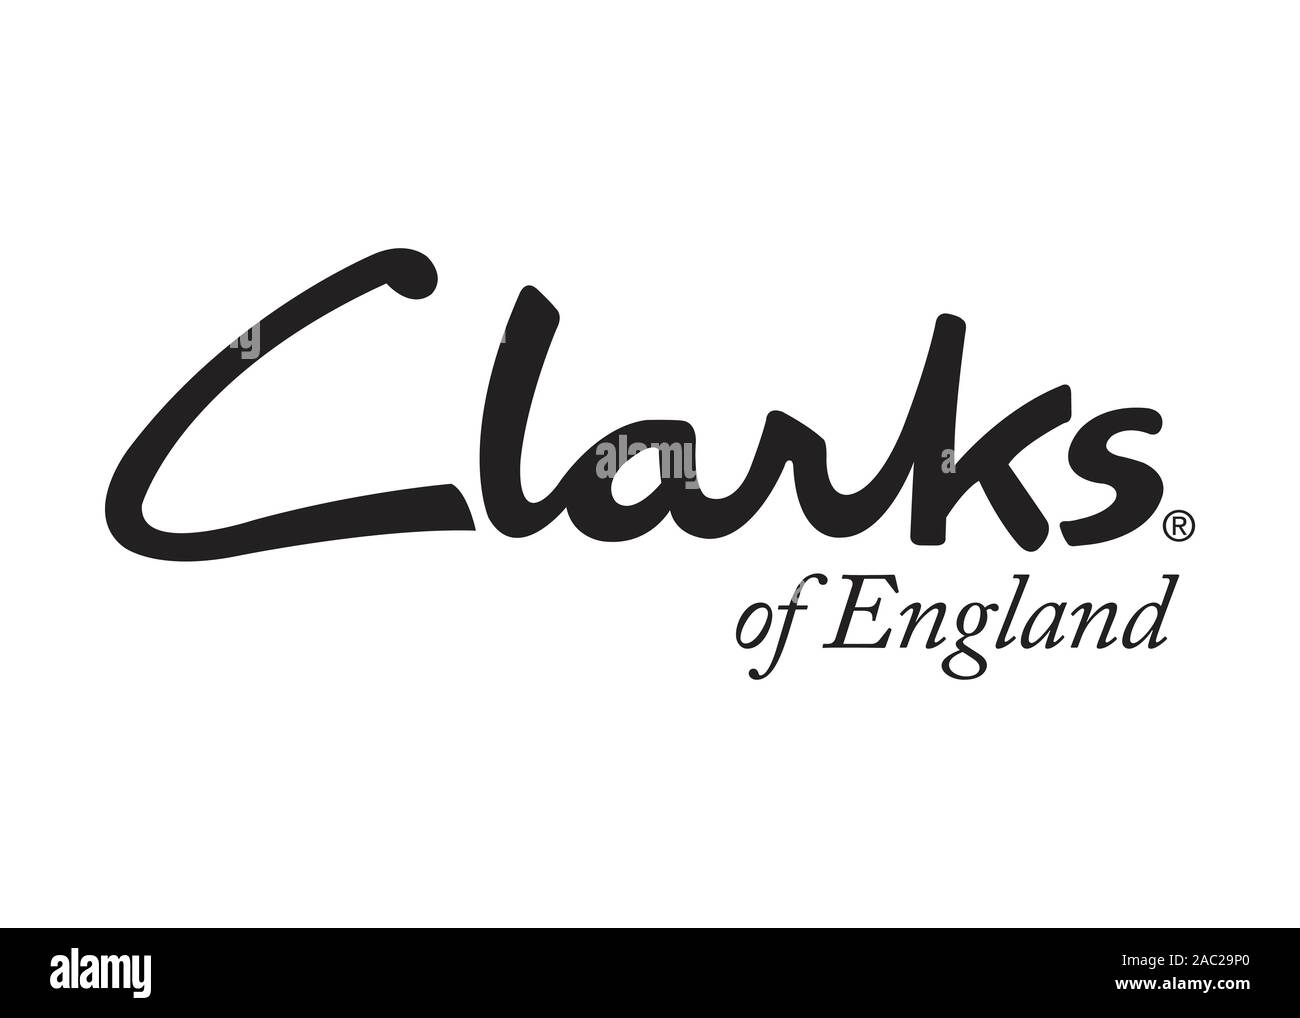 Clarks logotipo de Inglaterra Fotografía de stock - Alamy